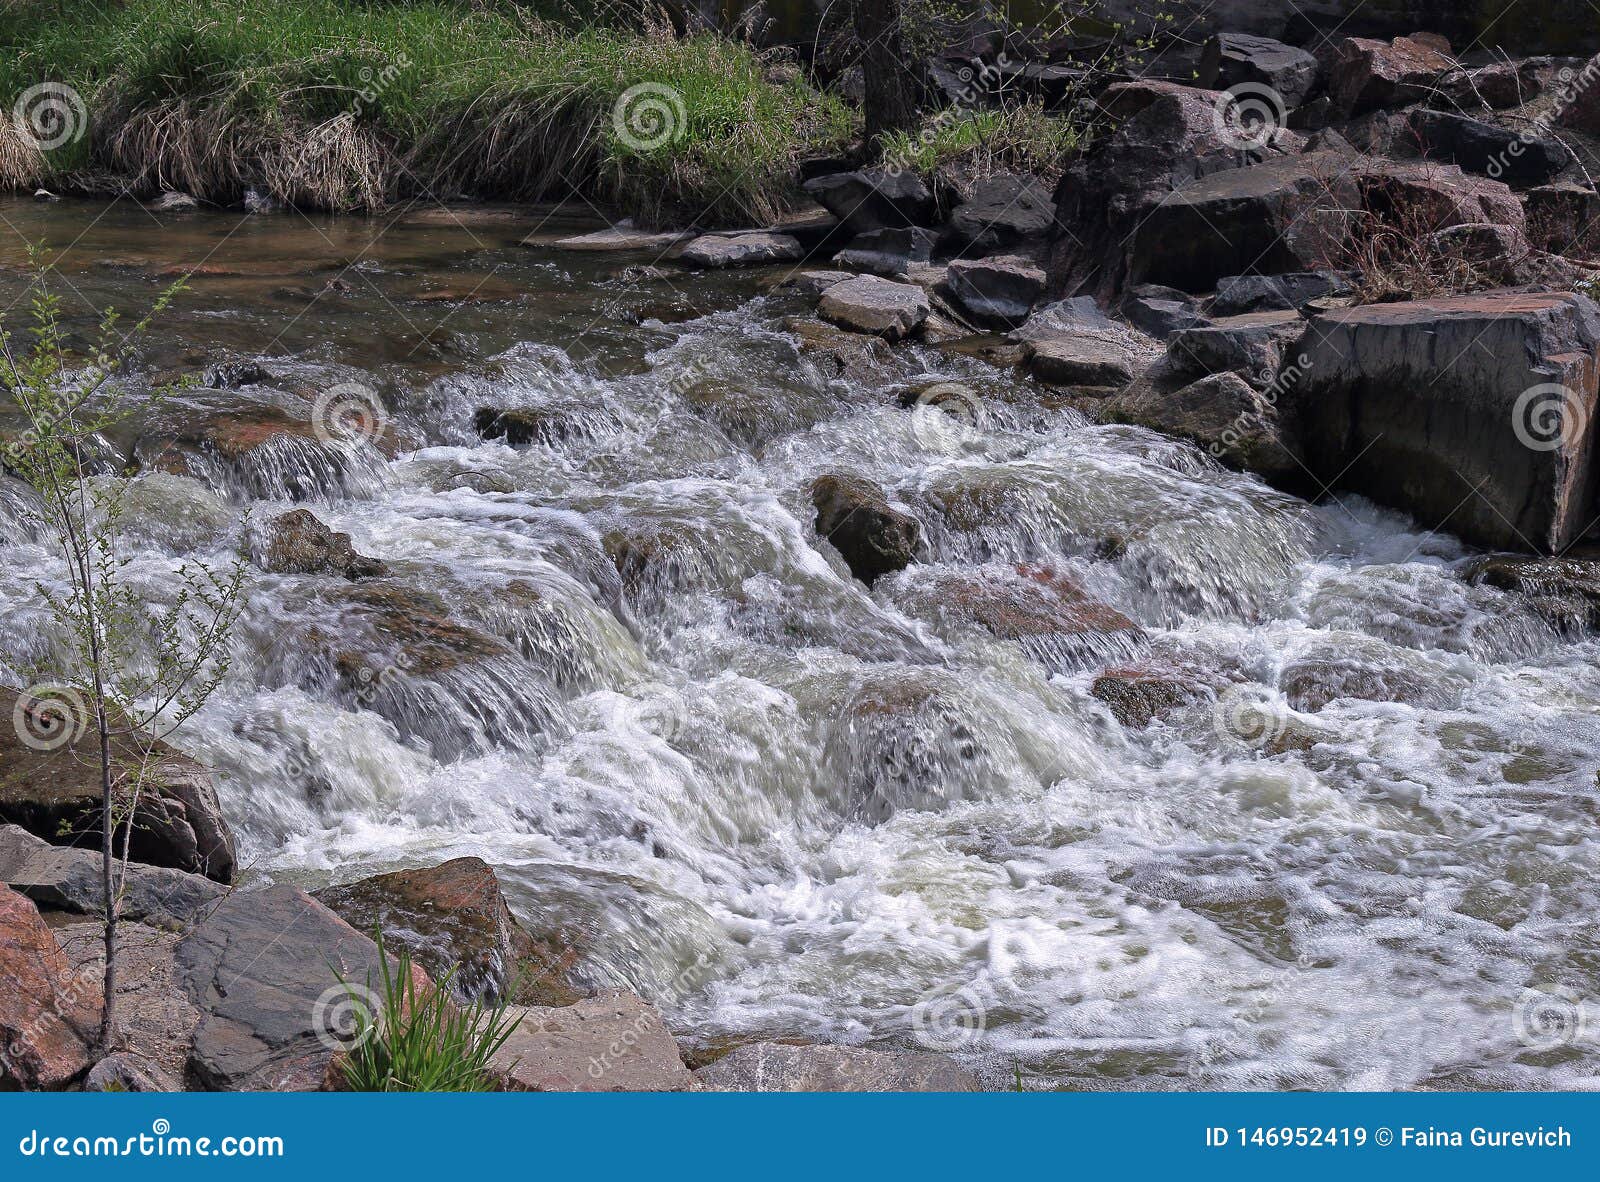 water stream running over rocks. cherry creek in denver